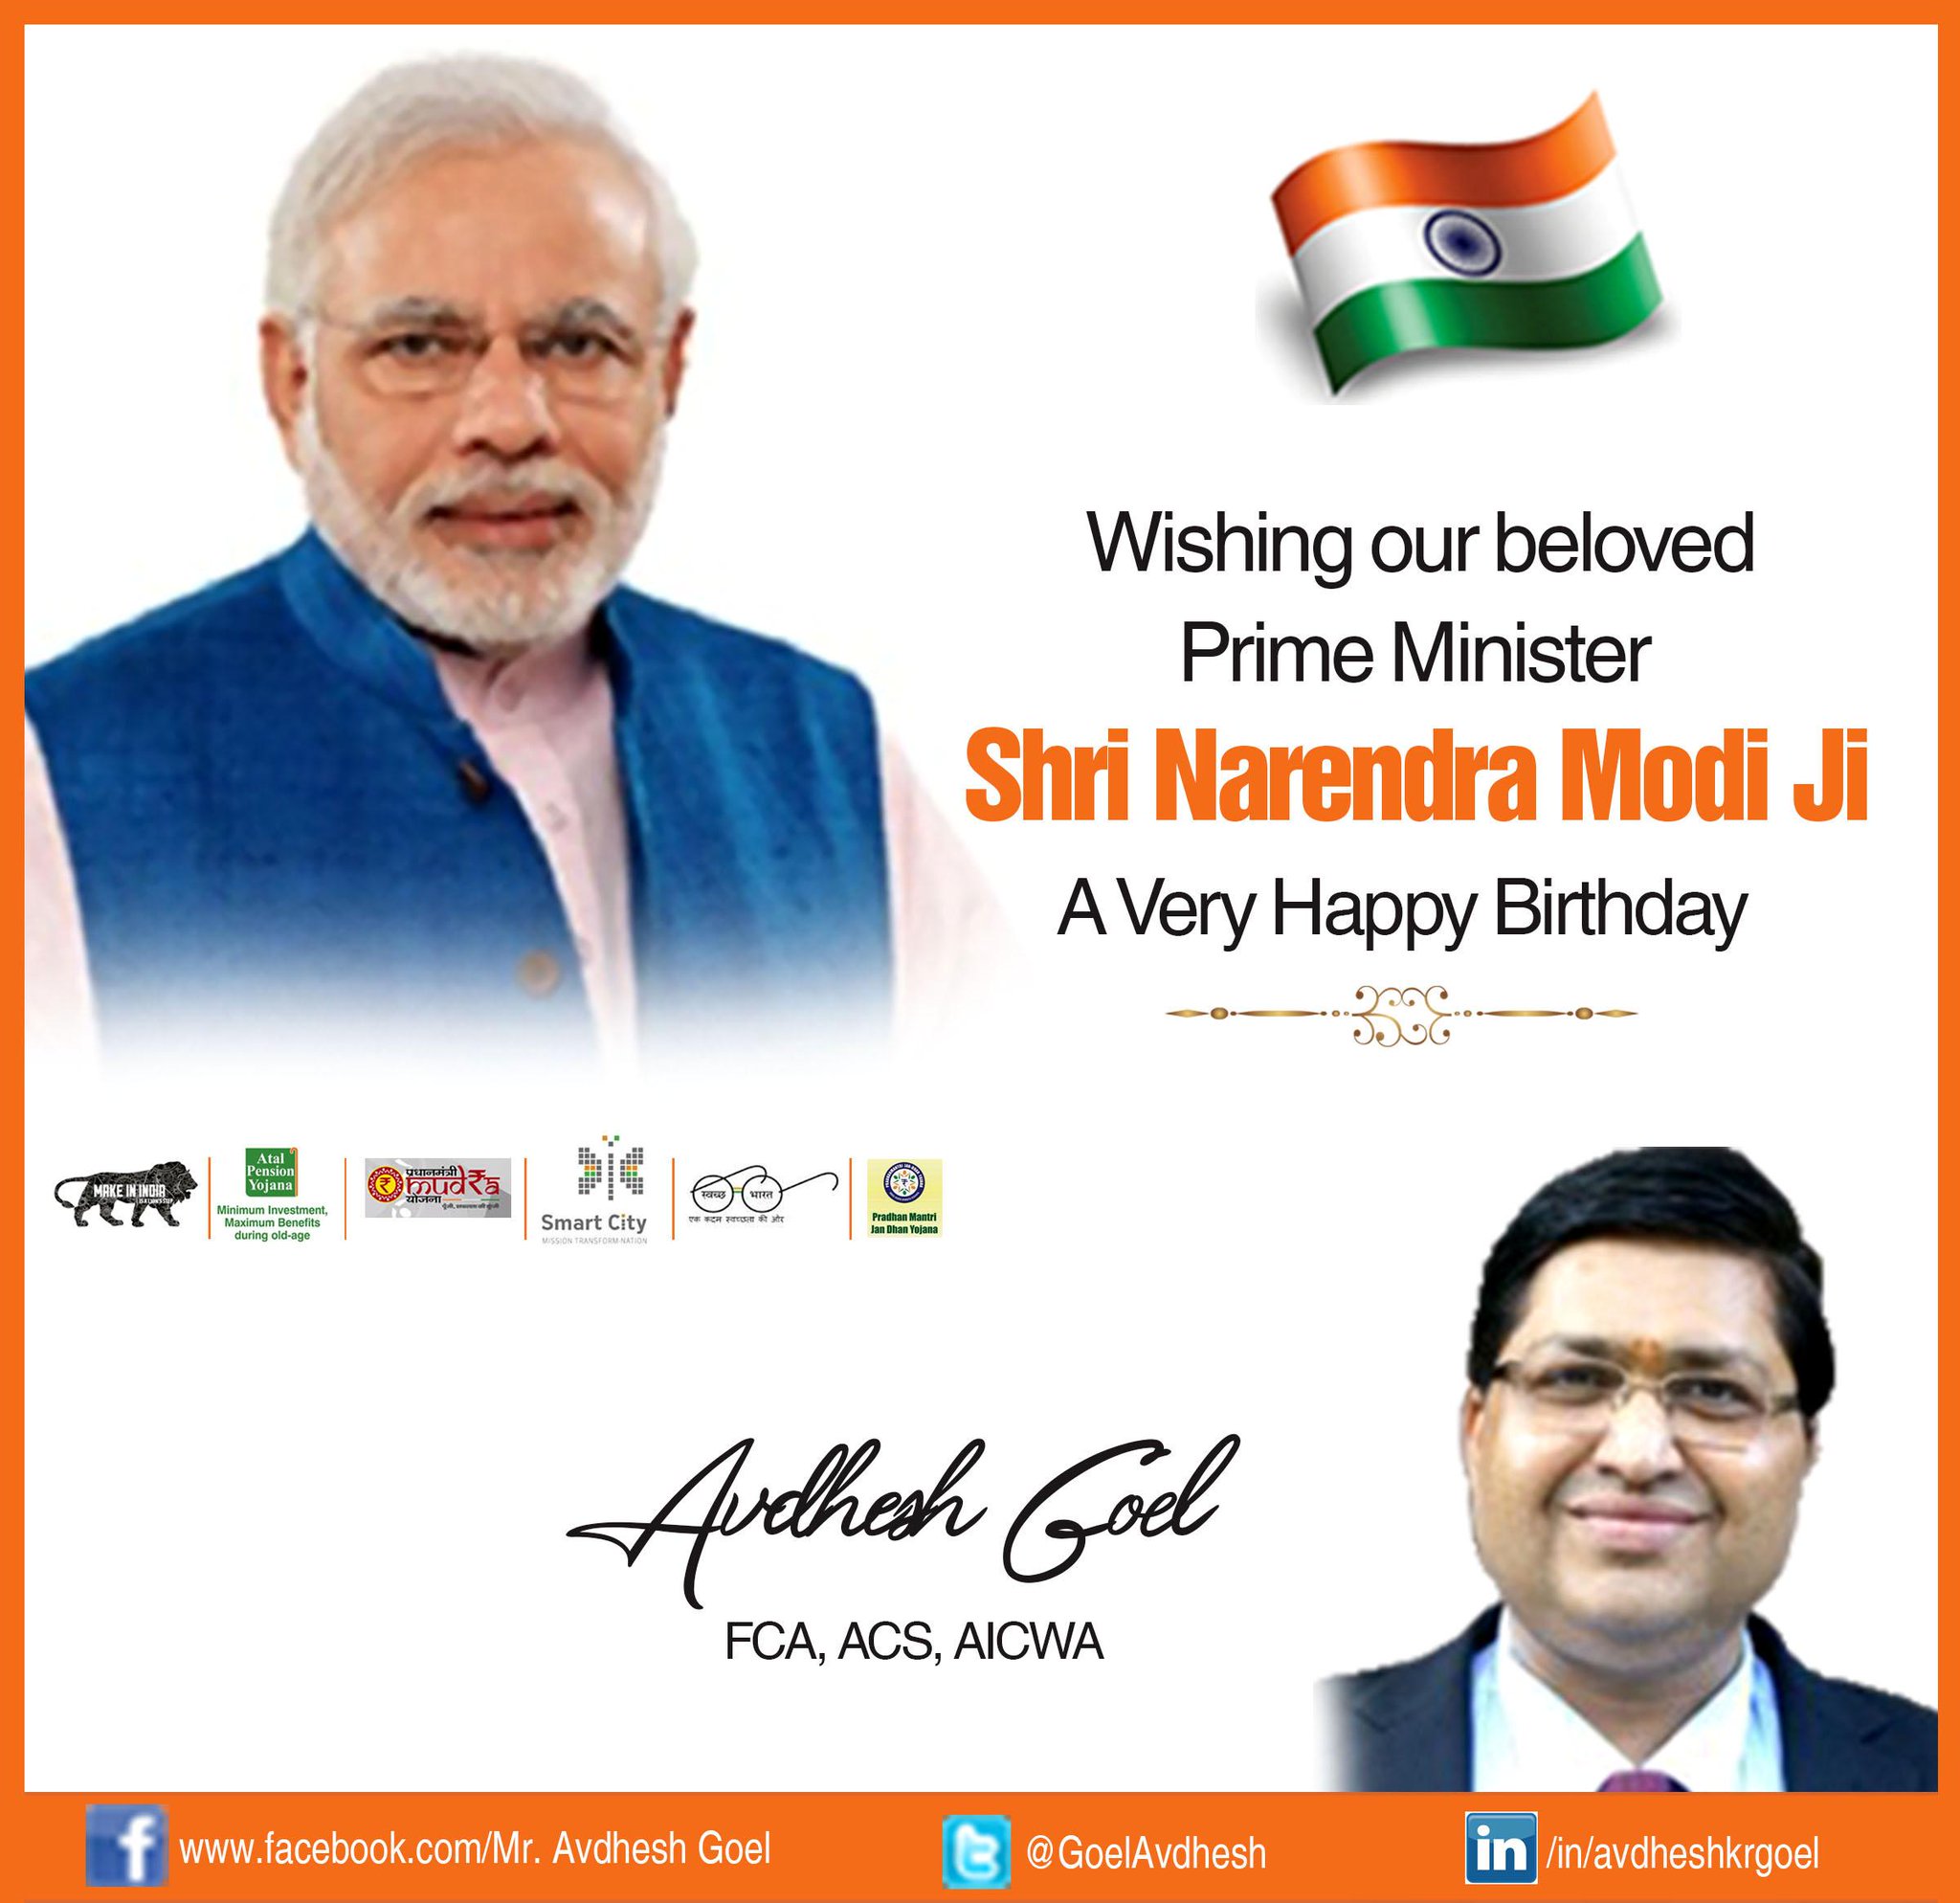  Wishing our beloved Prime Minister Shri Narendra Modi Ji A very Happy Birthday 